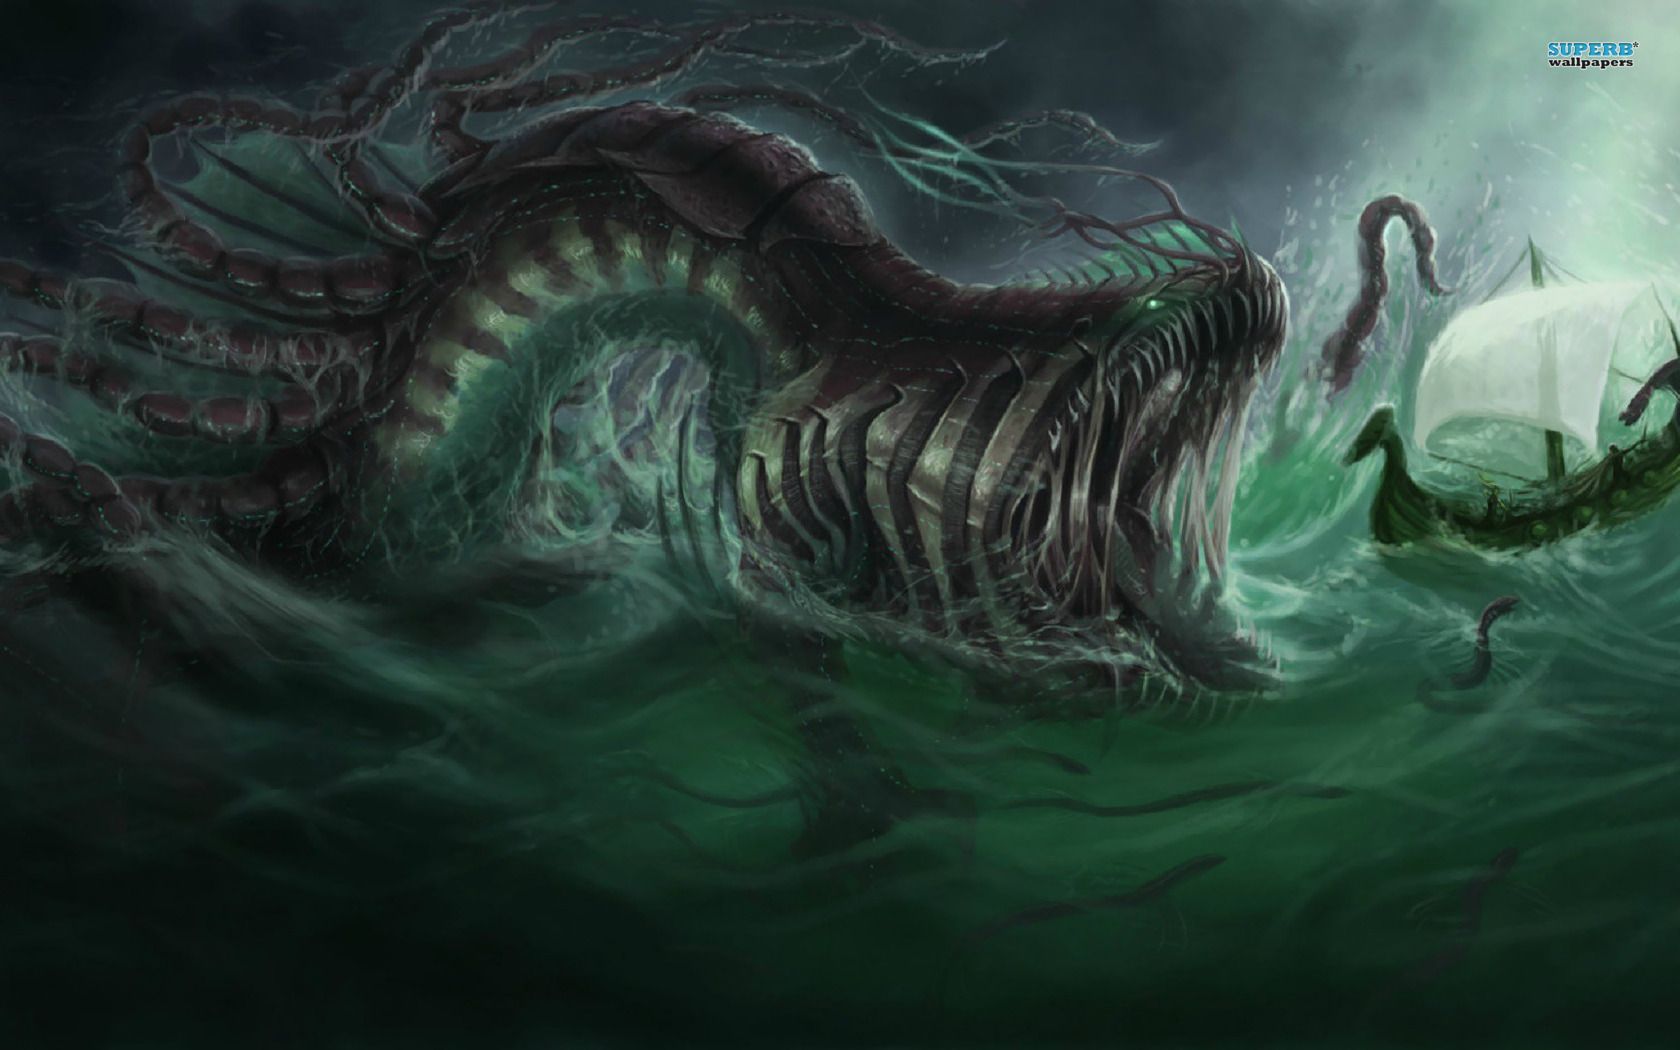 Sea Monster wallpaper - Fantasy wallpapers - #16428